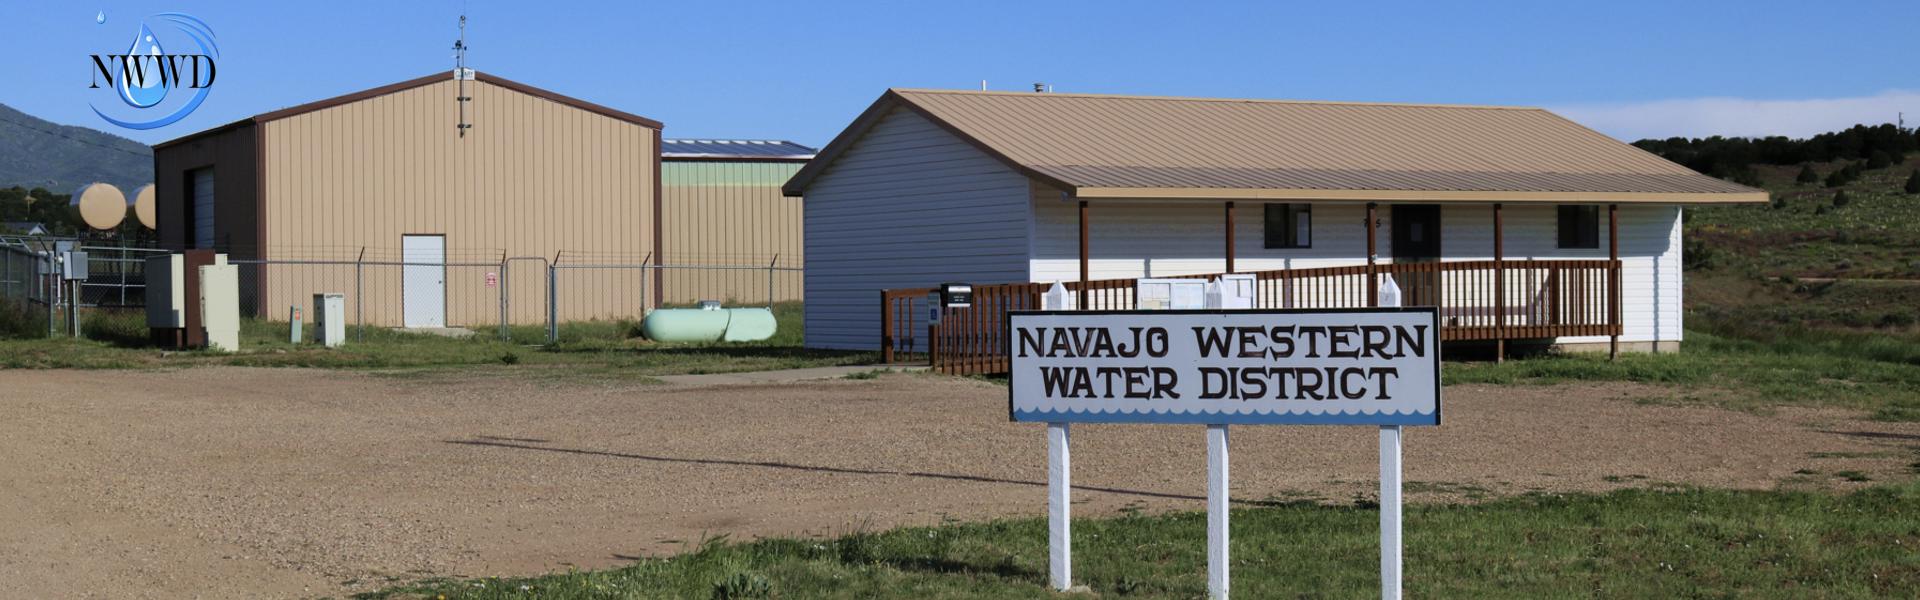 Navajo Western Water District Website